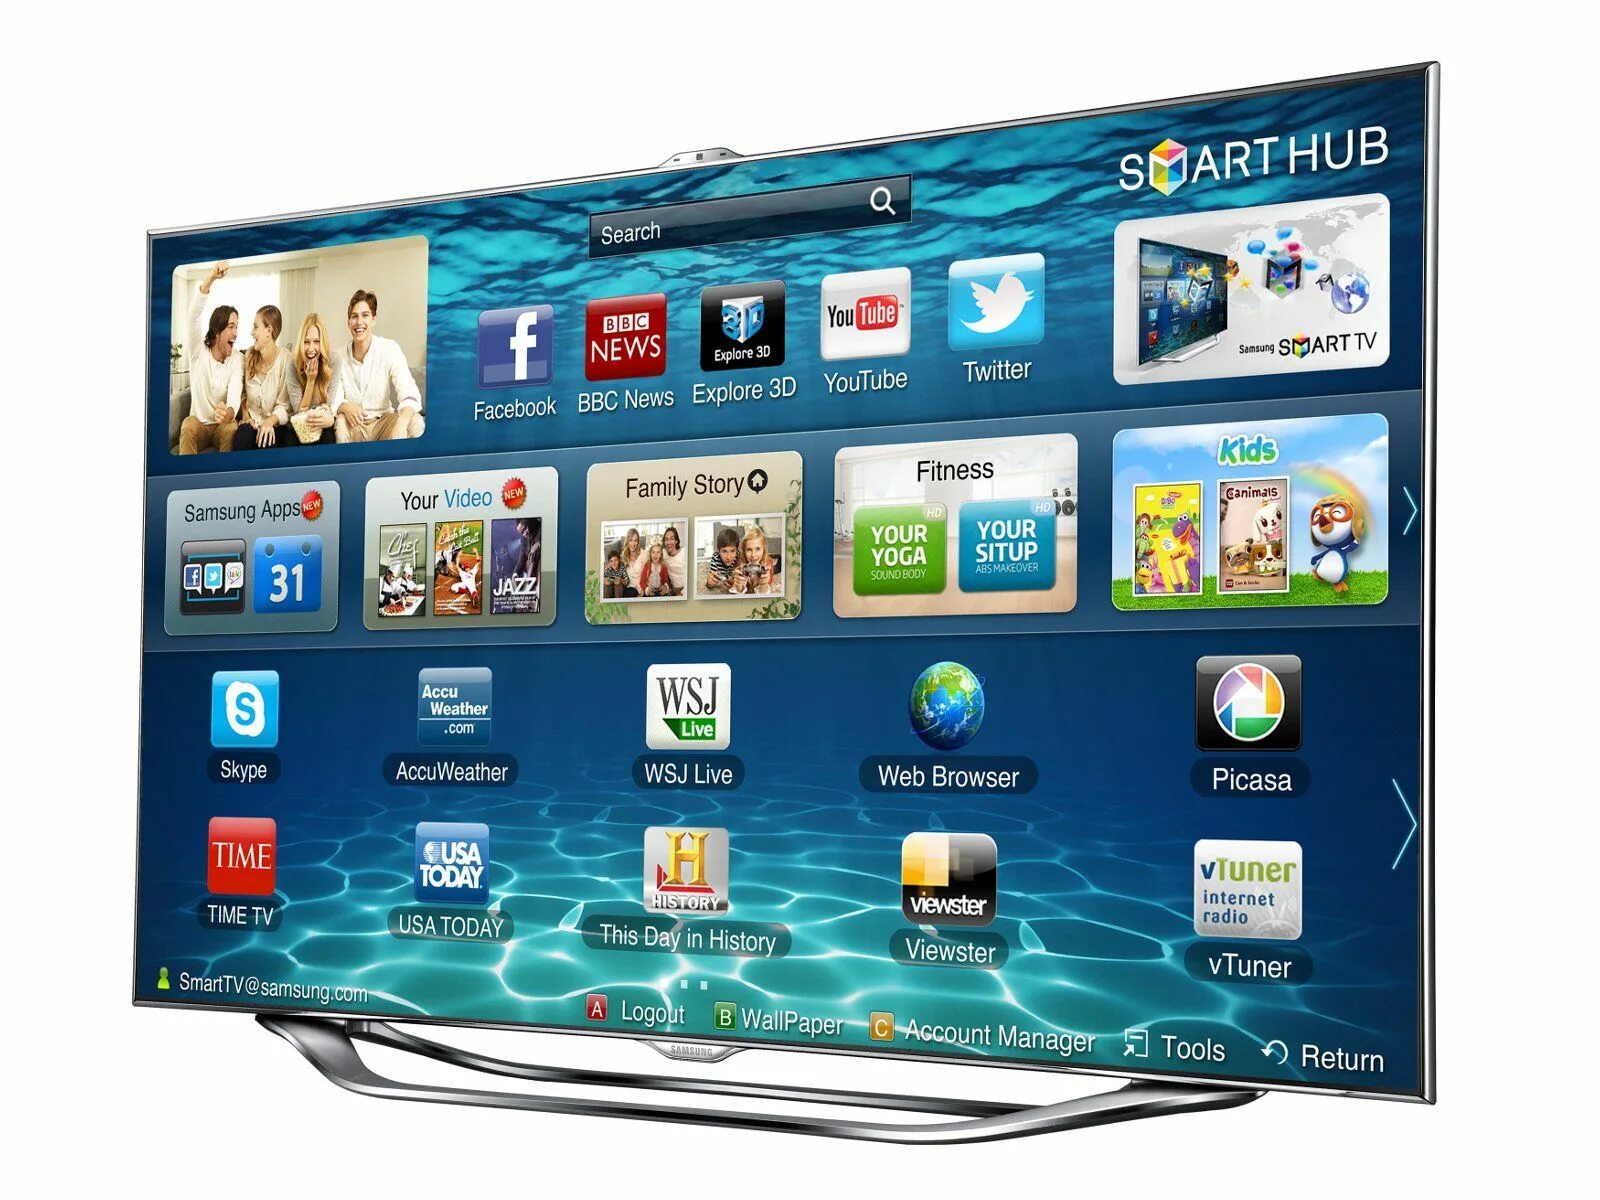 Что значит смарт тв. Смарт ТВ самсунг смарт Hub. Led Samsung Smart TV 2014. Телевизор Samsung 2013 смарт. Телевизор самсунг смарт ТВ 2014.